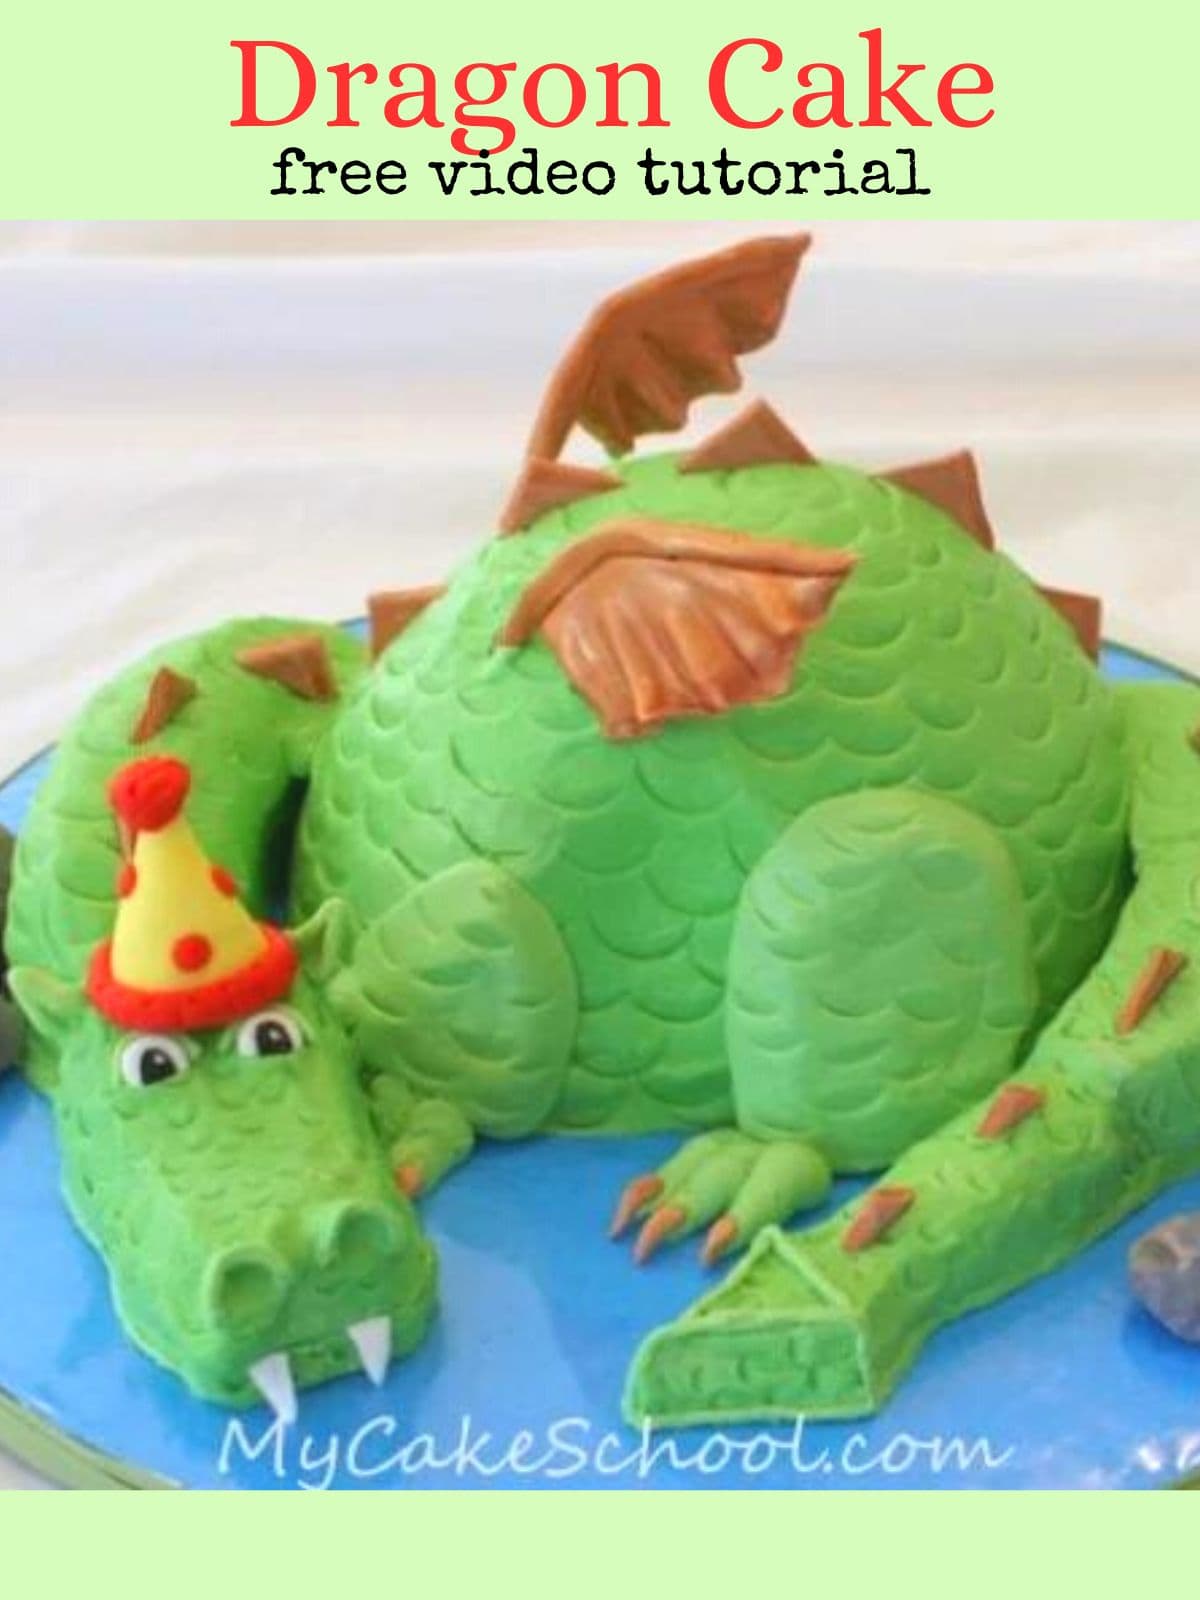 https://www.mycakeschool.com/images/2011/02/Dragon-Cake-Tutorial-image.jpg